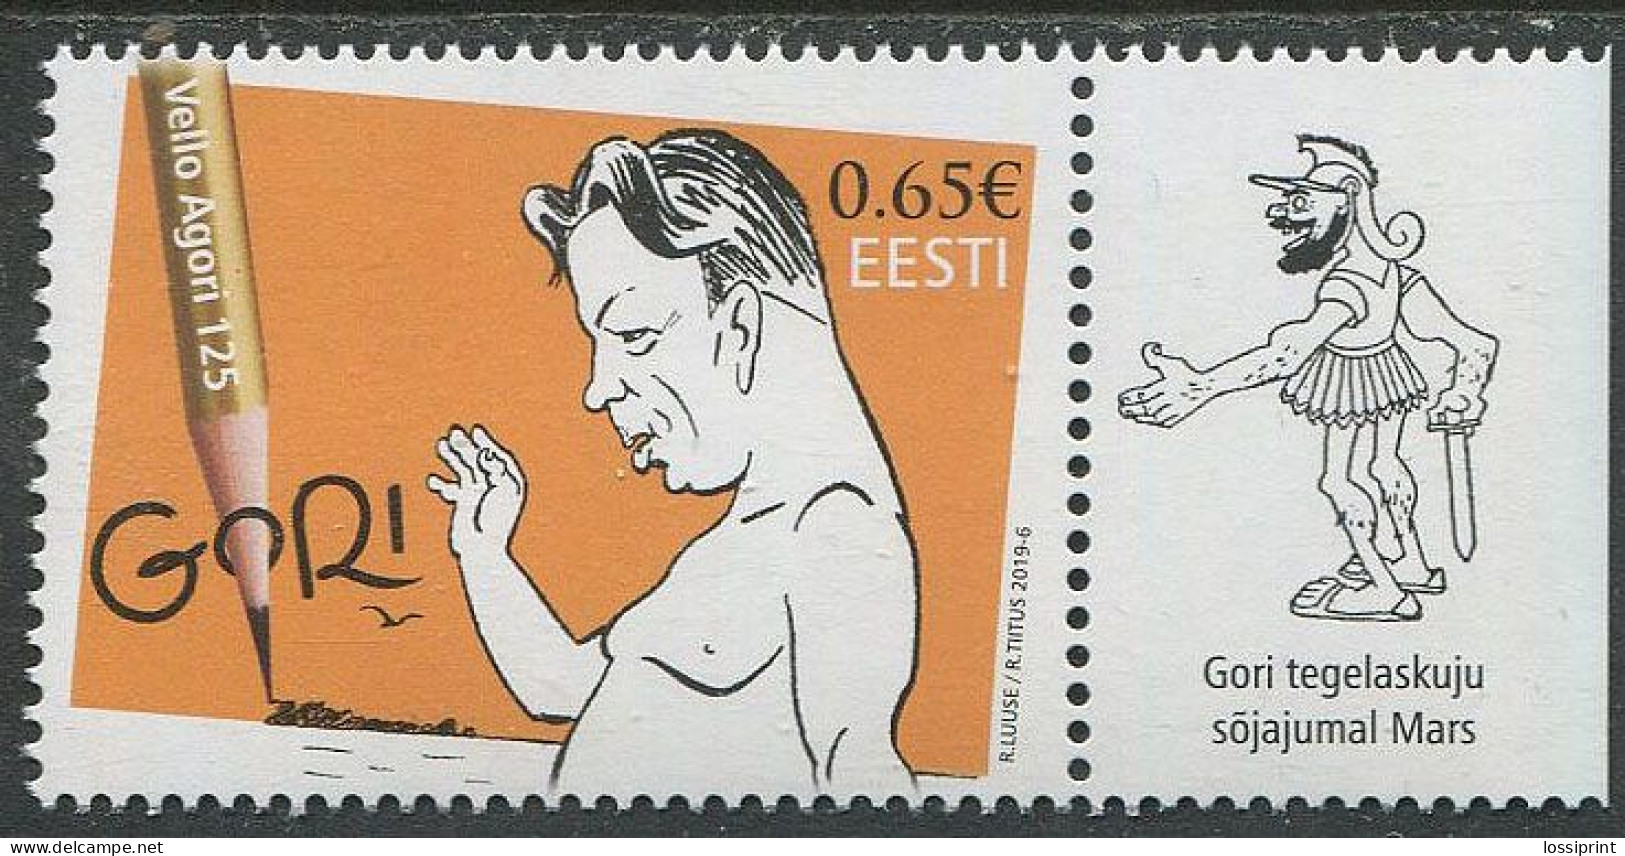 Estonia:Unused Stamp Vello Aguri 125 Years From Birth, GORI, 2019, MNH - Estonia